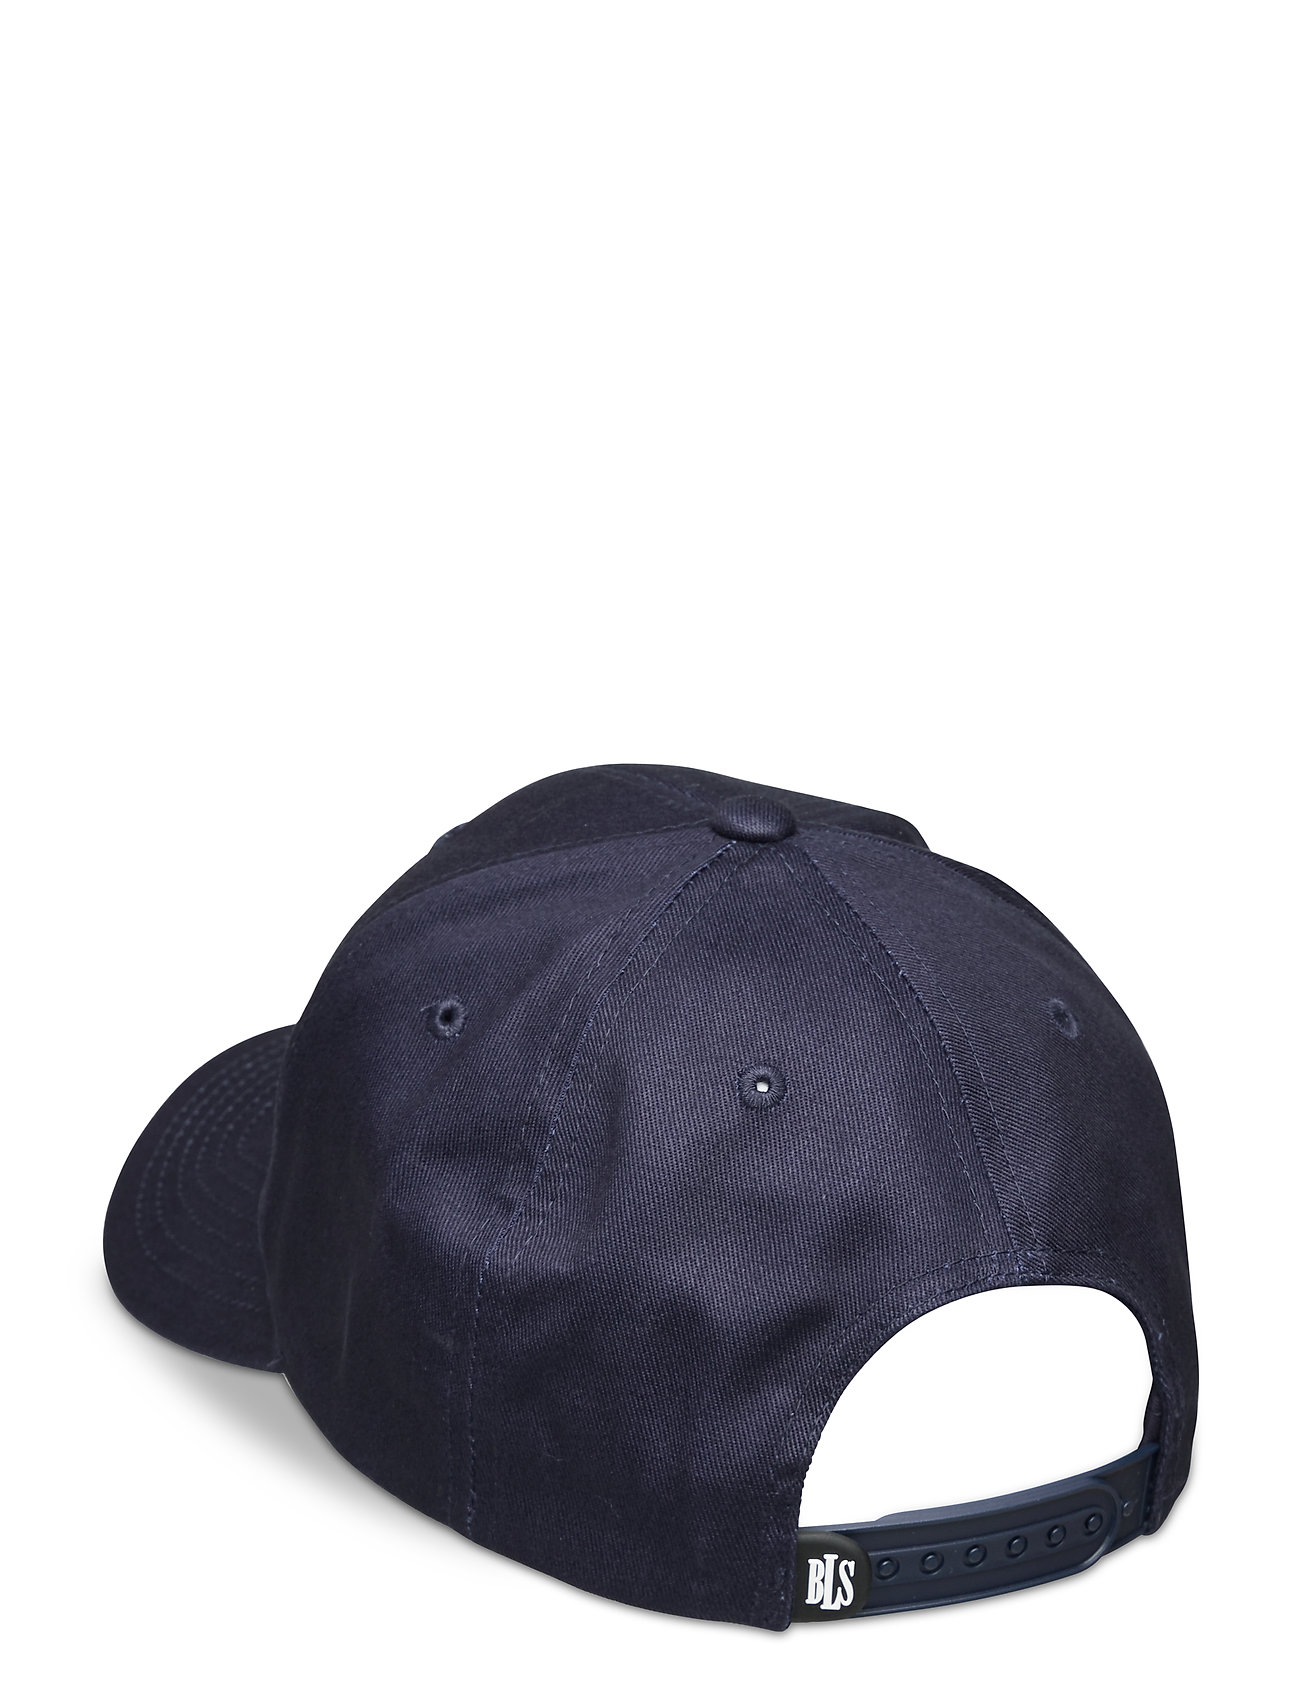 Classic Baseball Cap Accessories Headwear Caps Blå BLS Hafnia